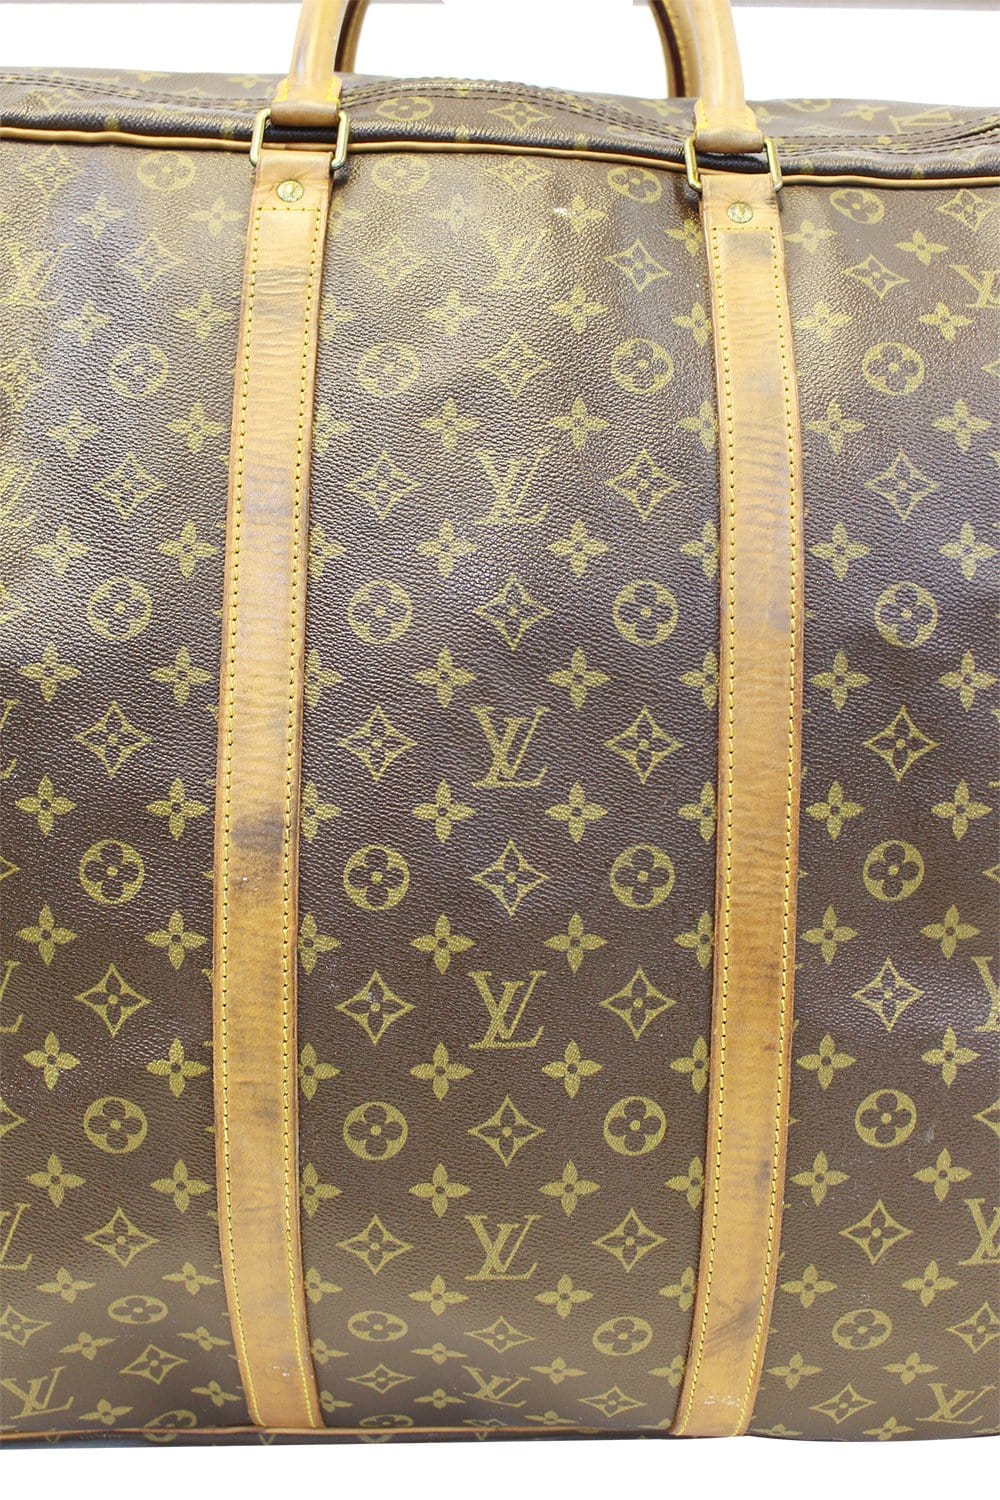 Vintage Louis Vuitton Sirius 70 Monogram Canvas Soft Sided Suitcase #138606